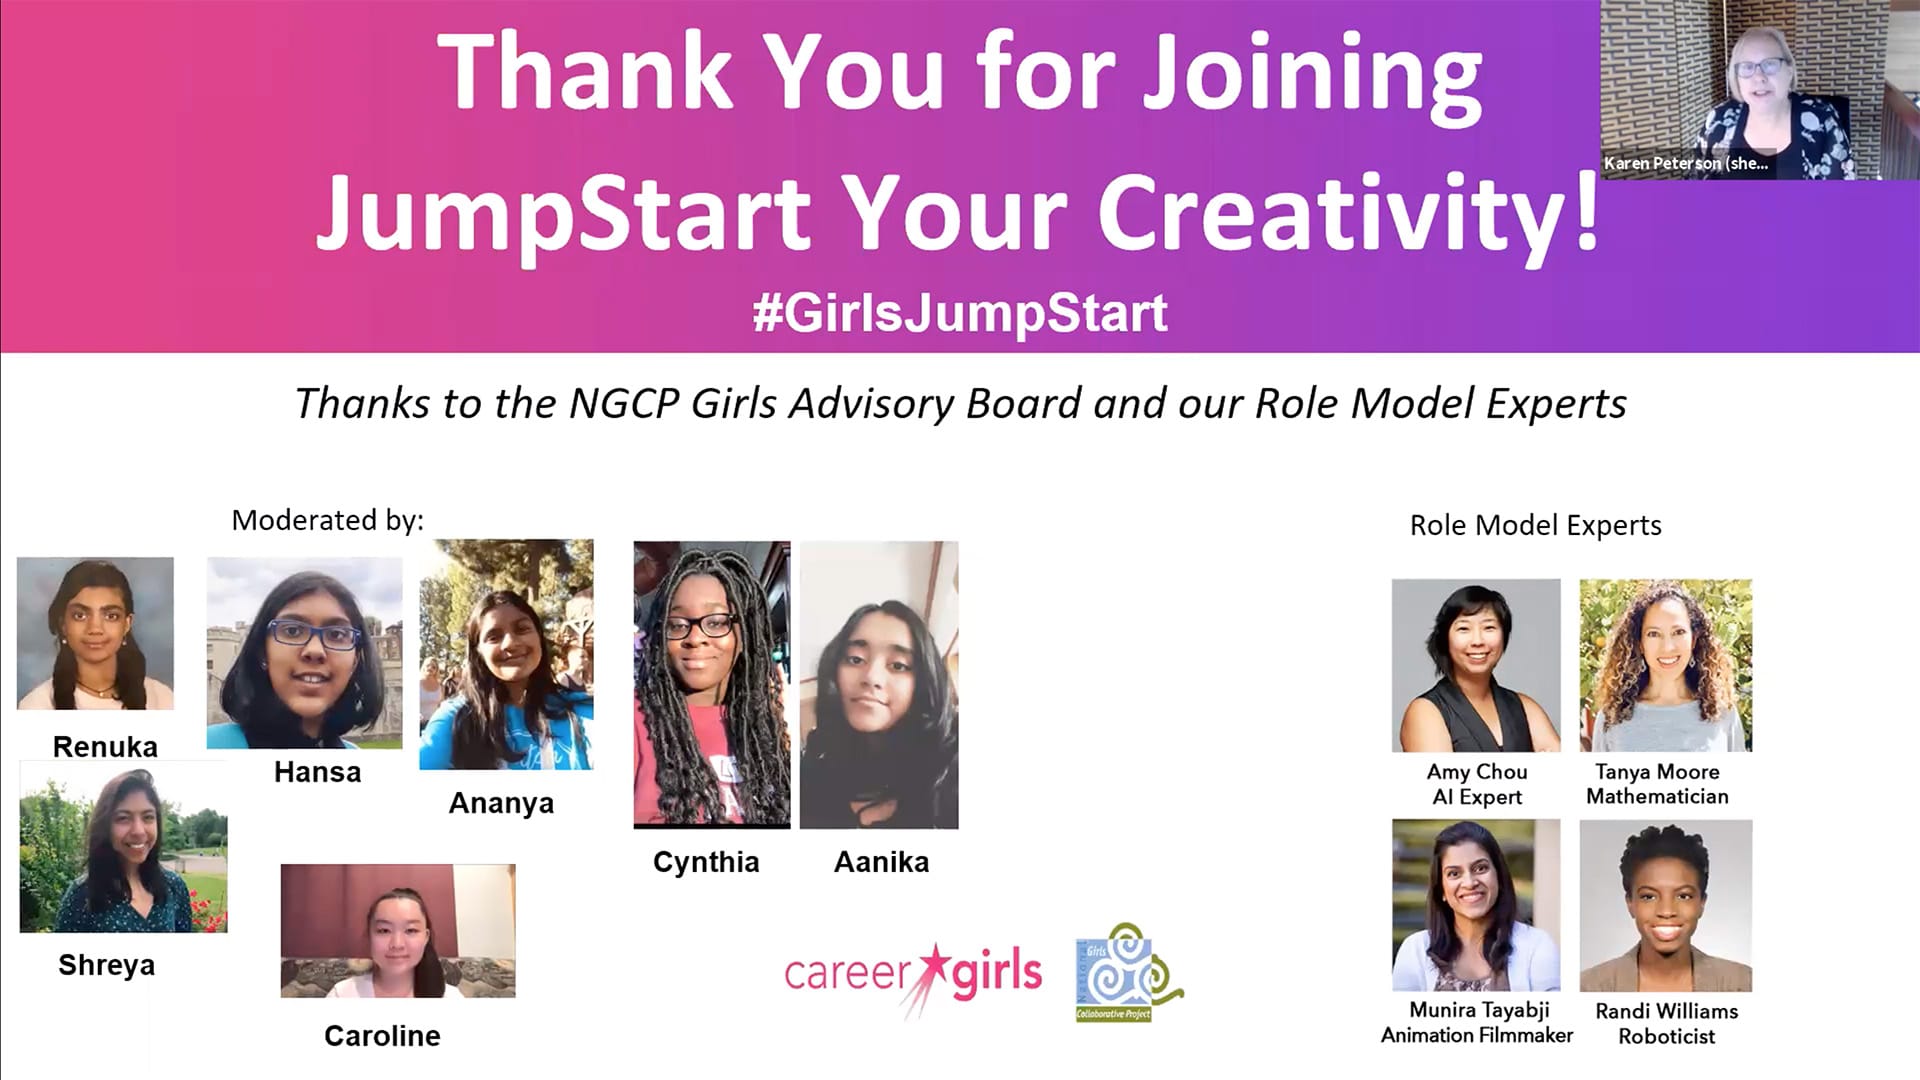 National Girls Collaborative AI Careers Jumpstart Your Creativity Career Girls Town Hall Event